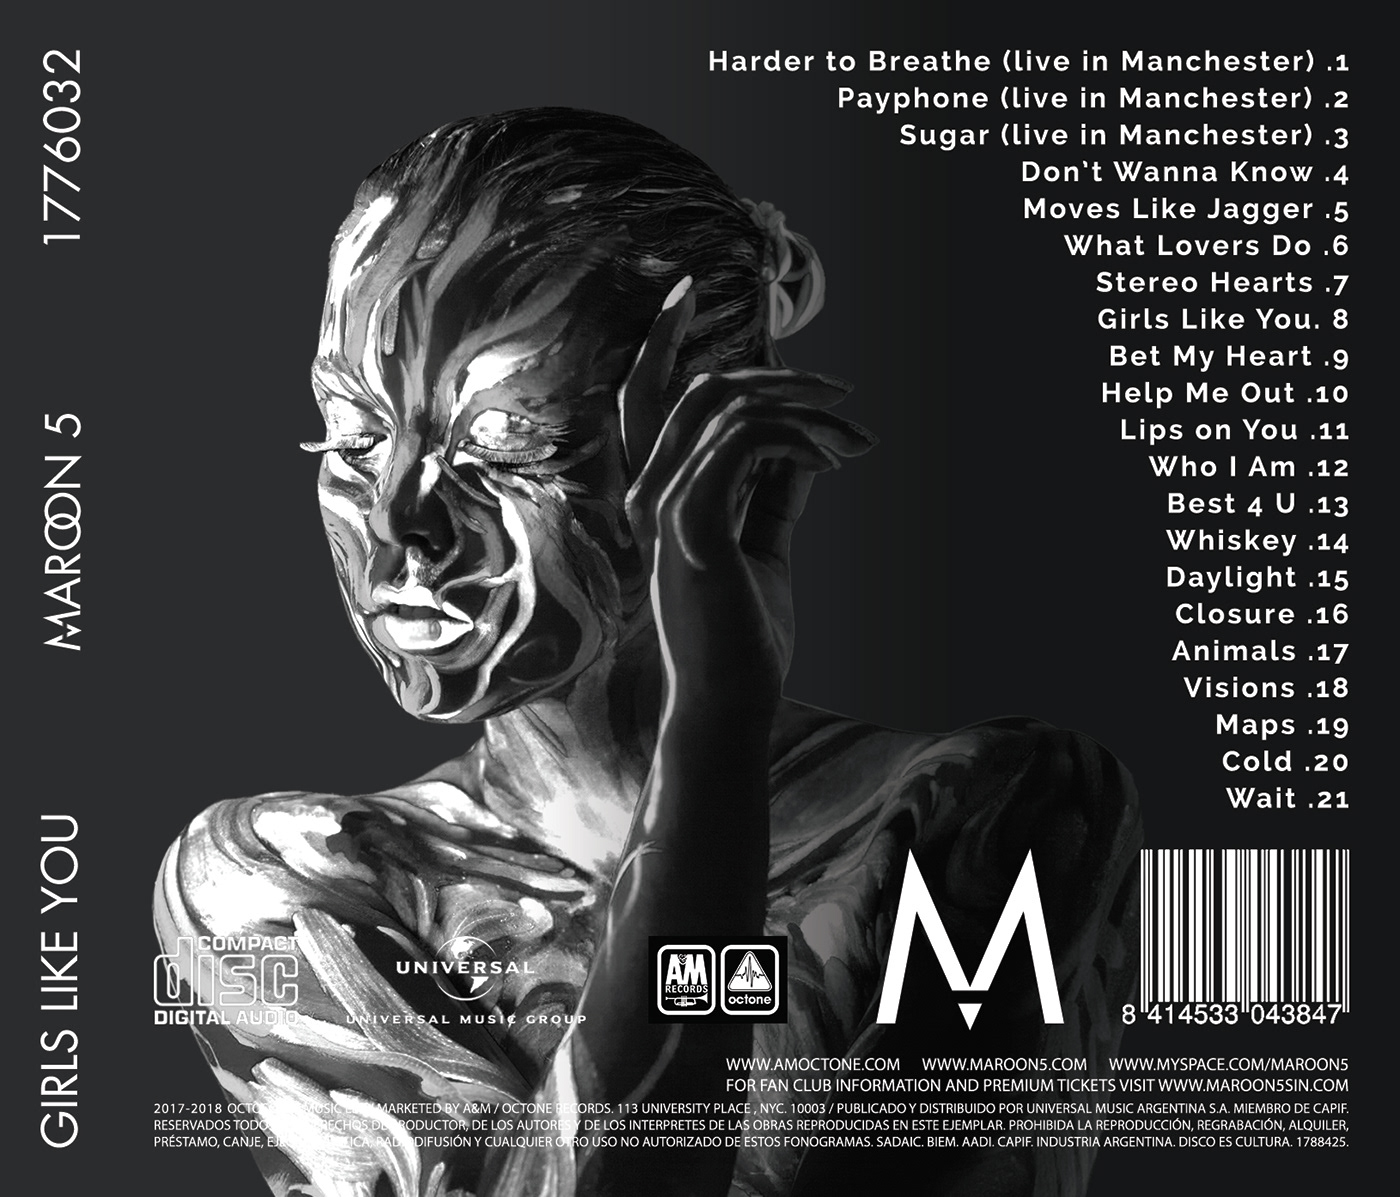 cd music designe graphic maroon 5 grayscale